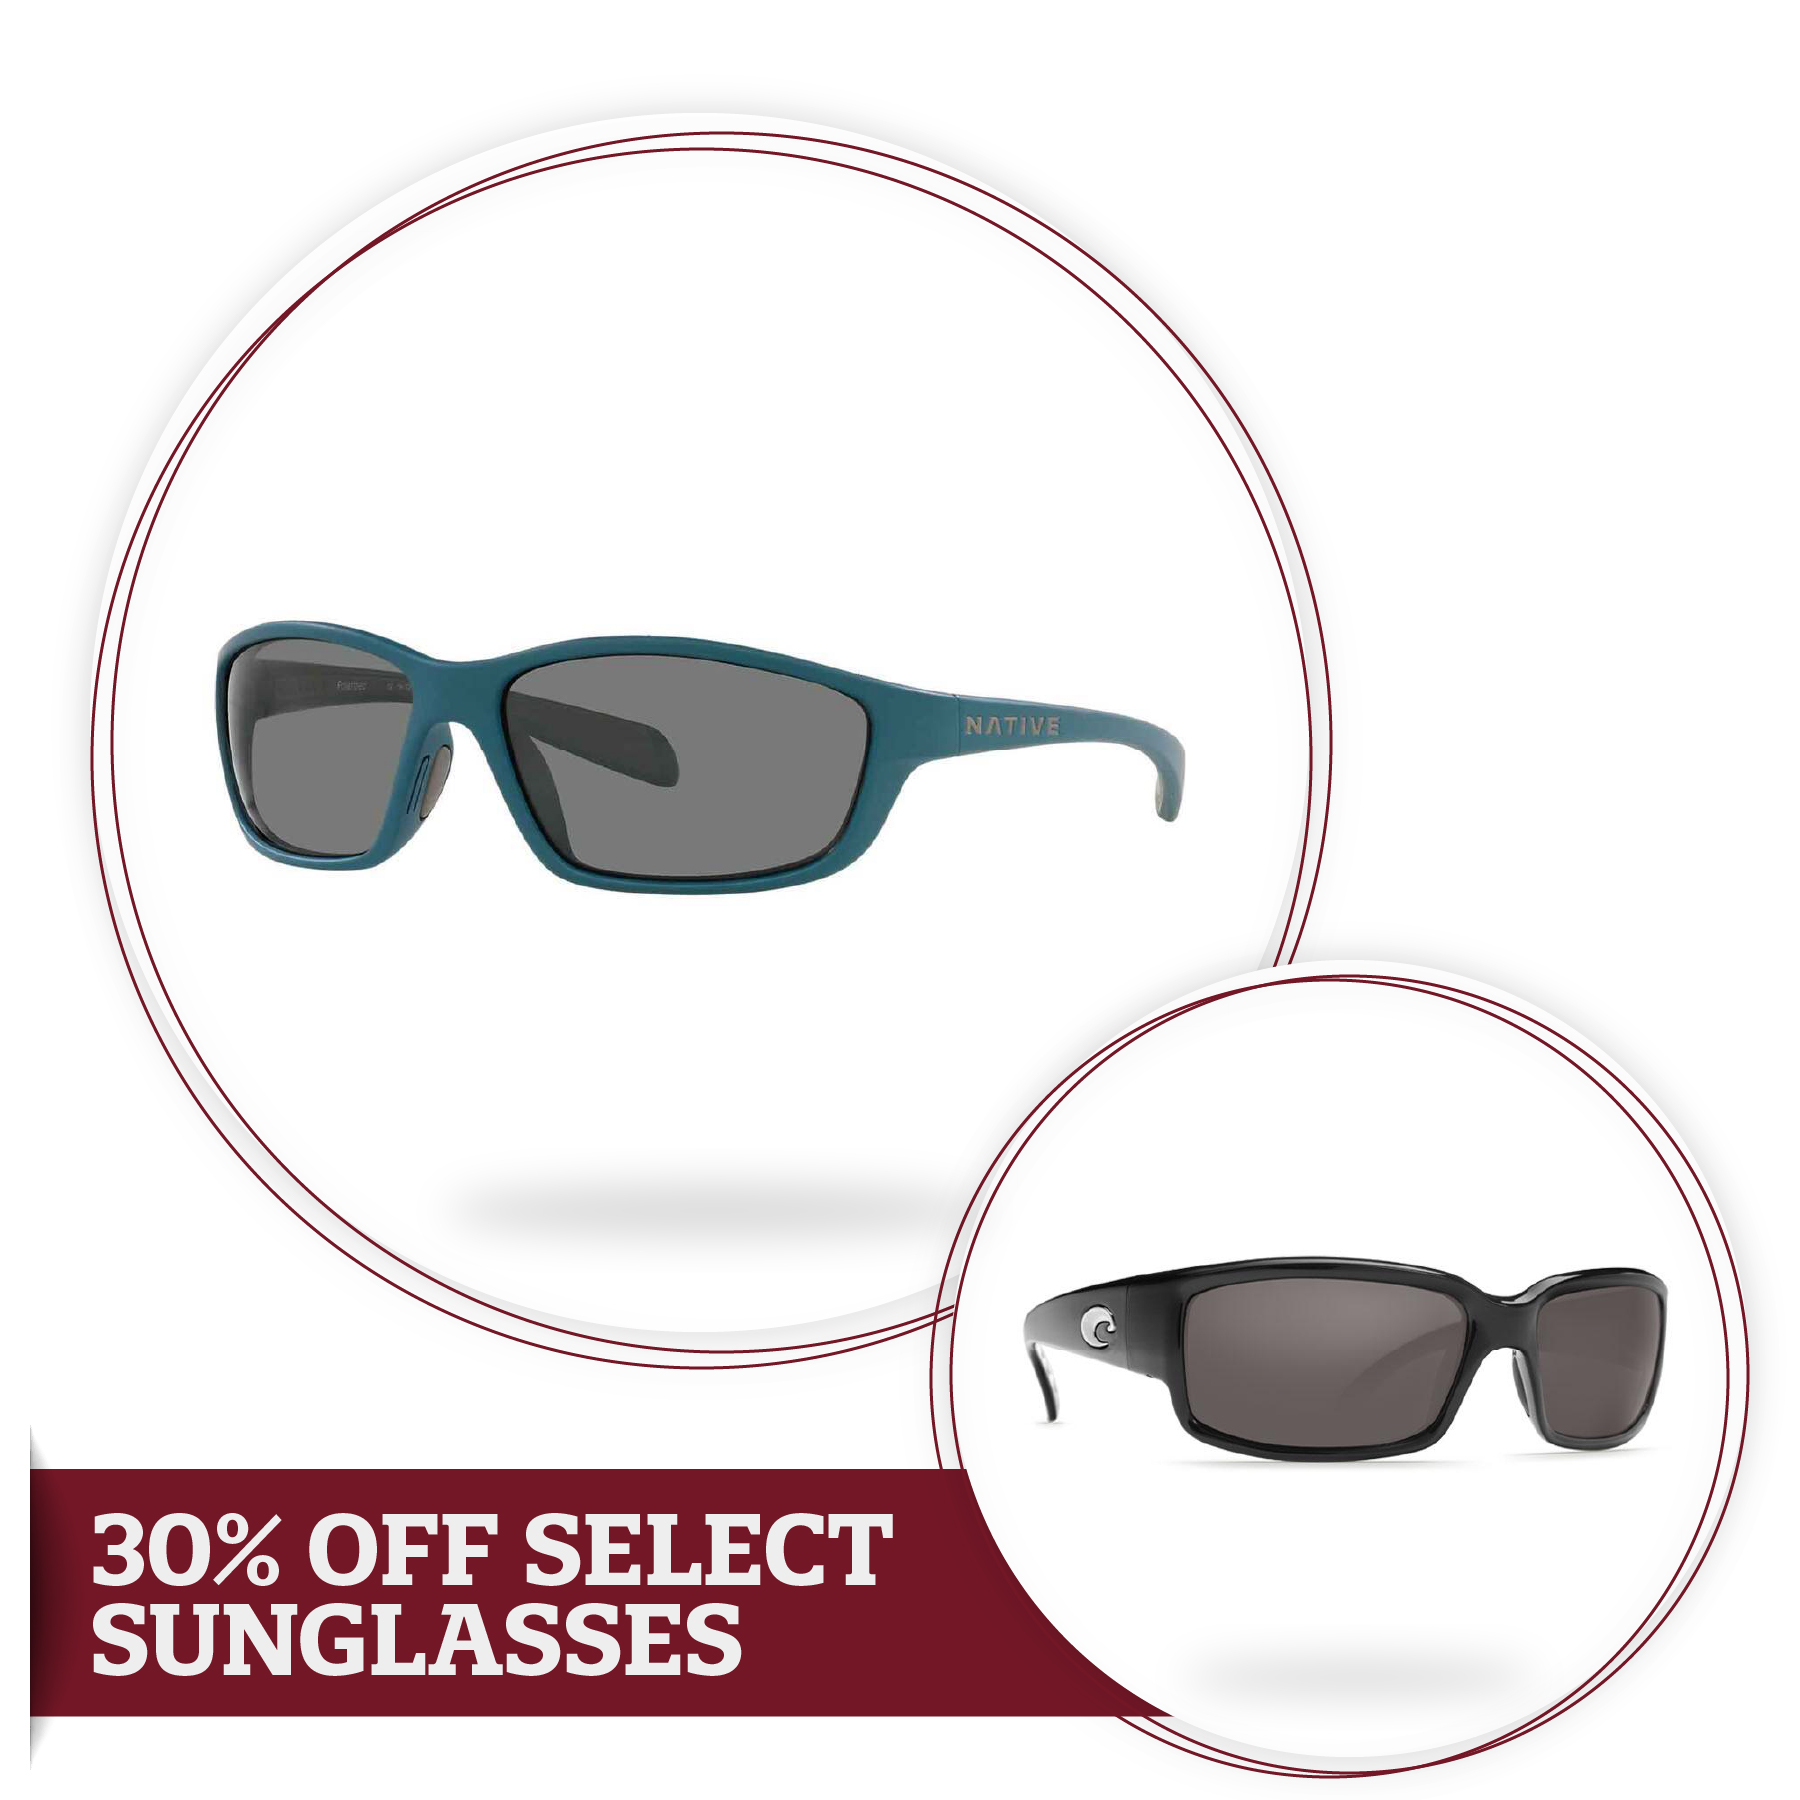 30% Off Sunglasses